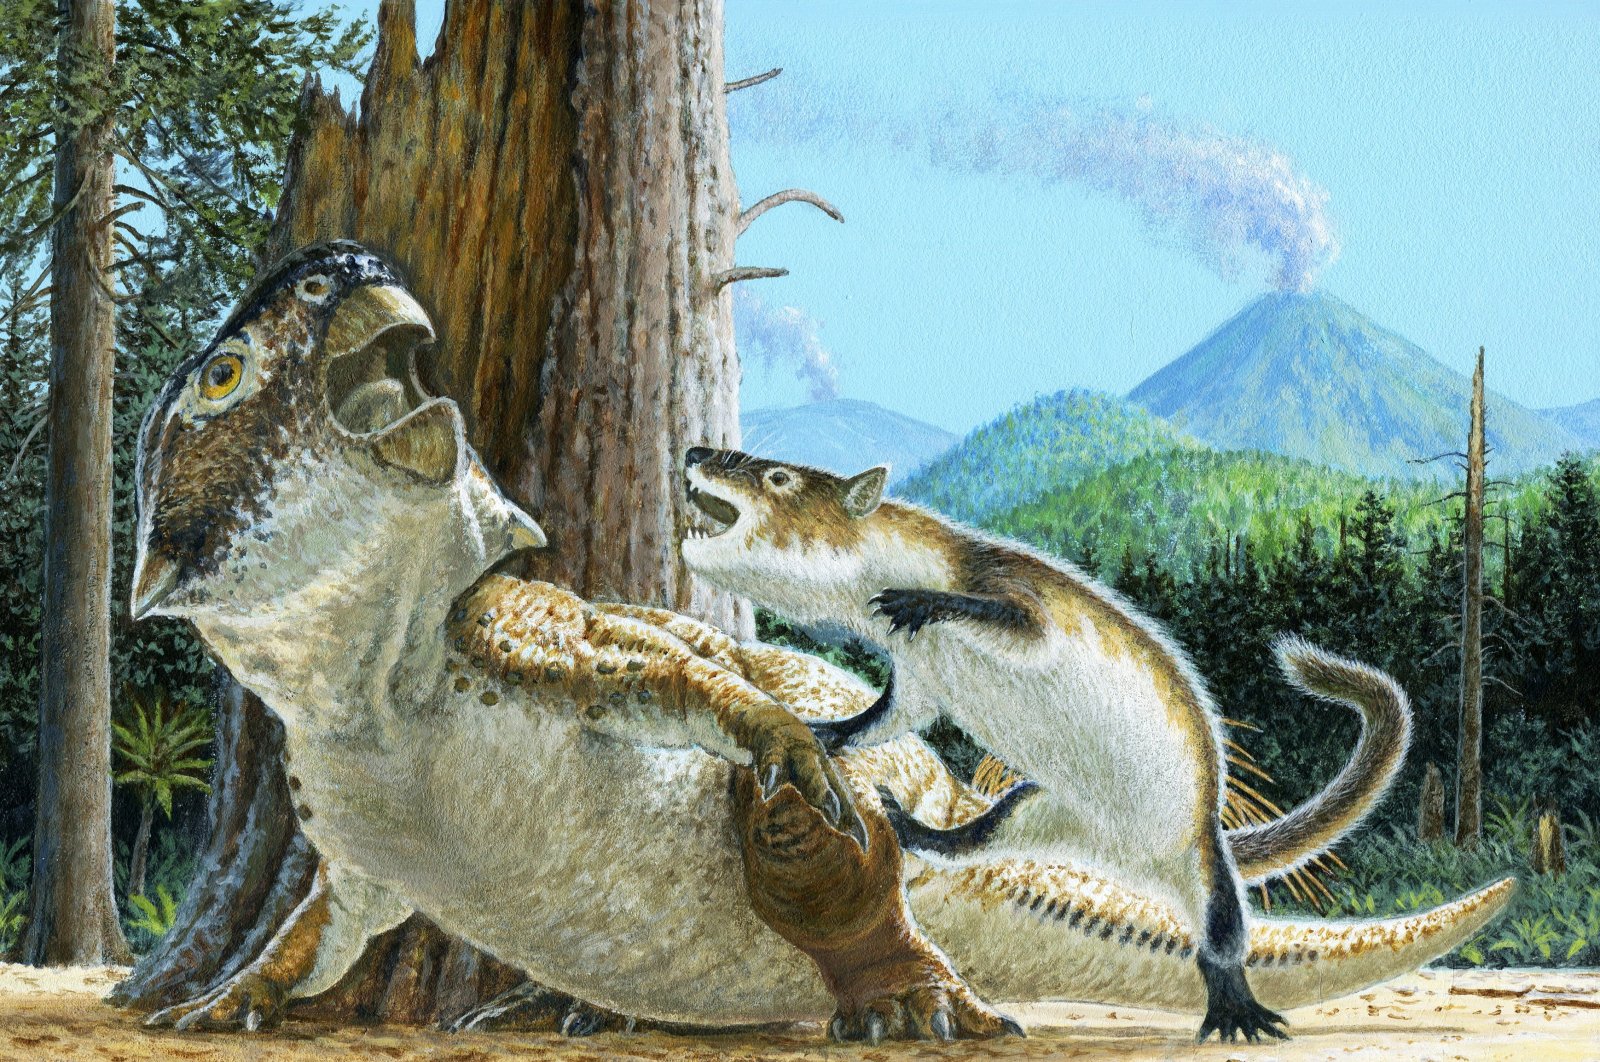 Mamalia, dinosaurus ditemukan terkunci dalam pertempuran sengit sejak 125 juta tahun lalu